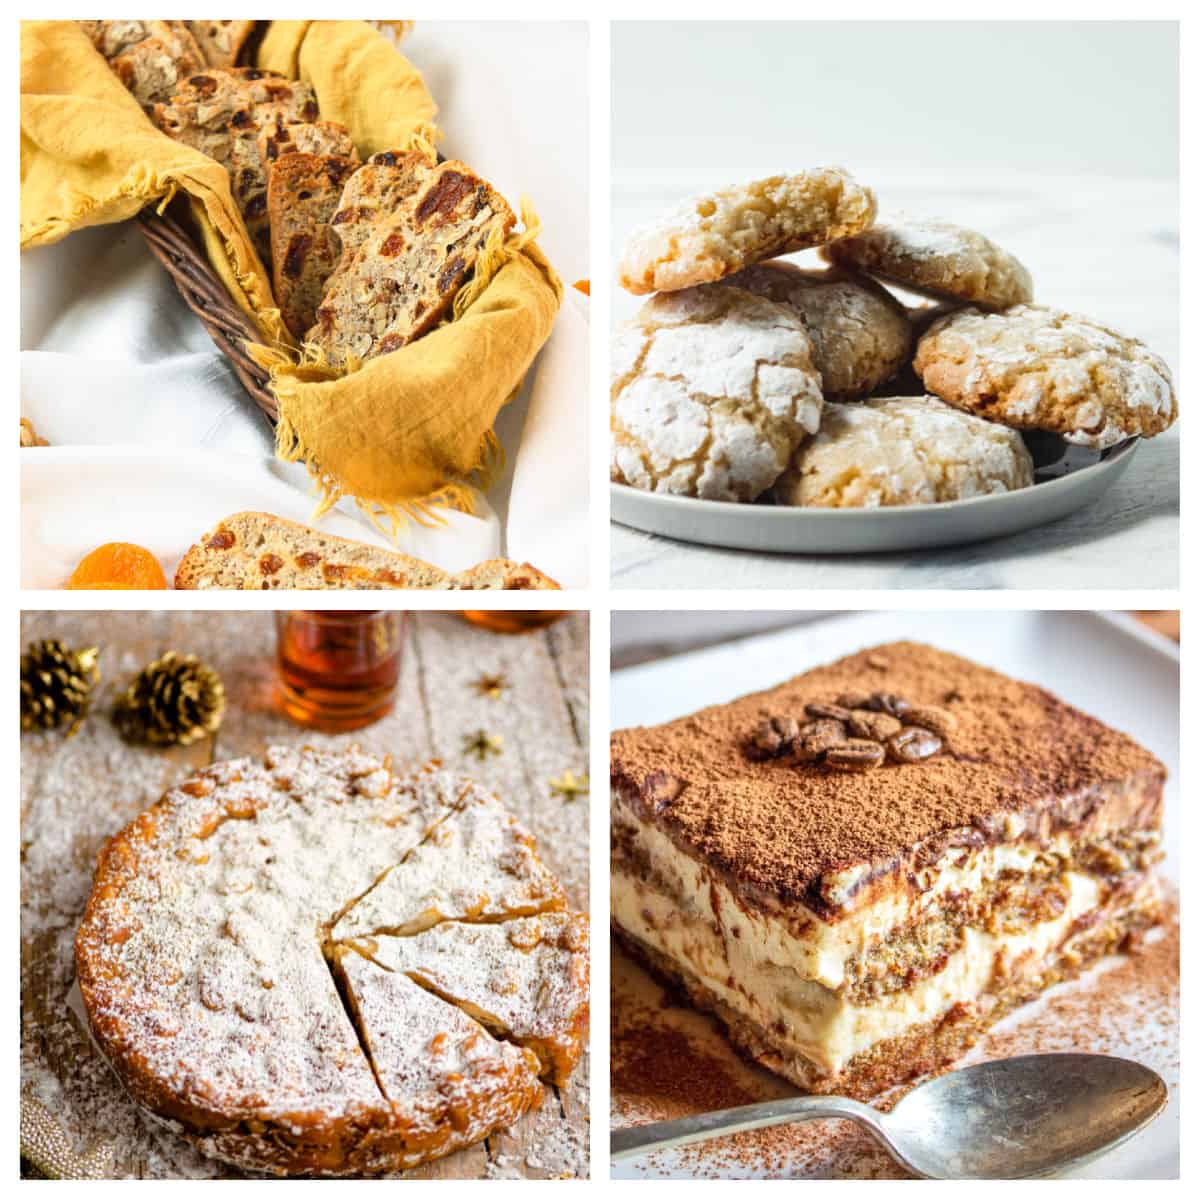 Collage of Italian desserts inlcuding tiramisu and cookies.